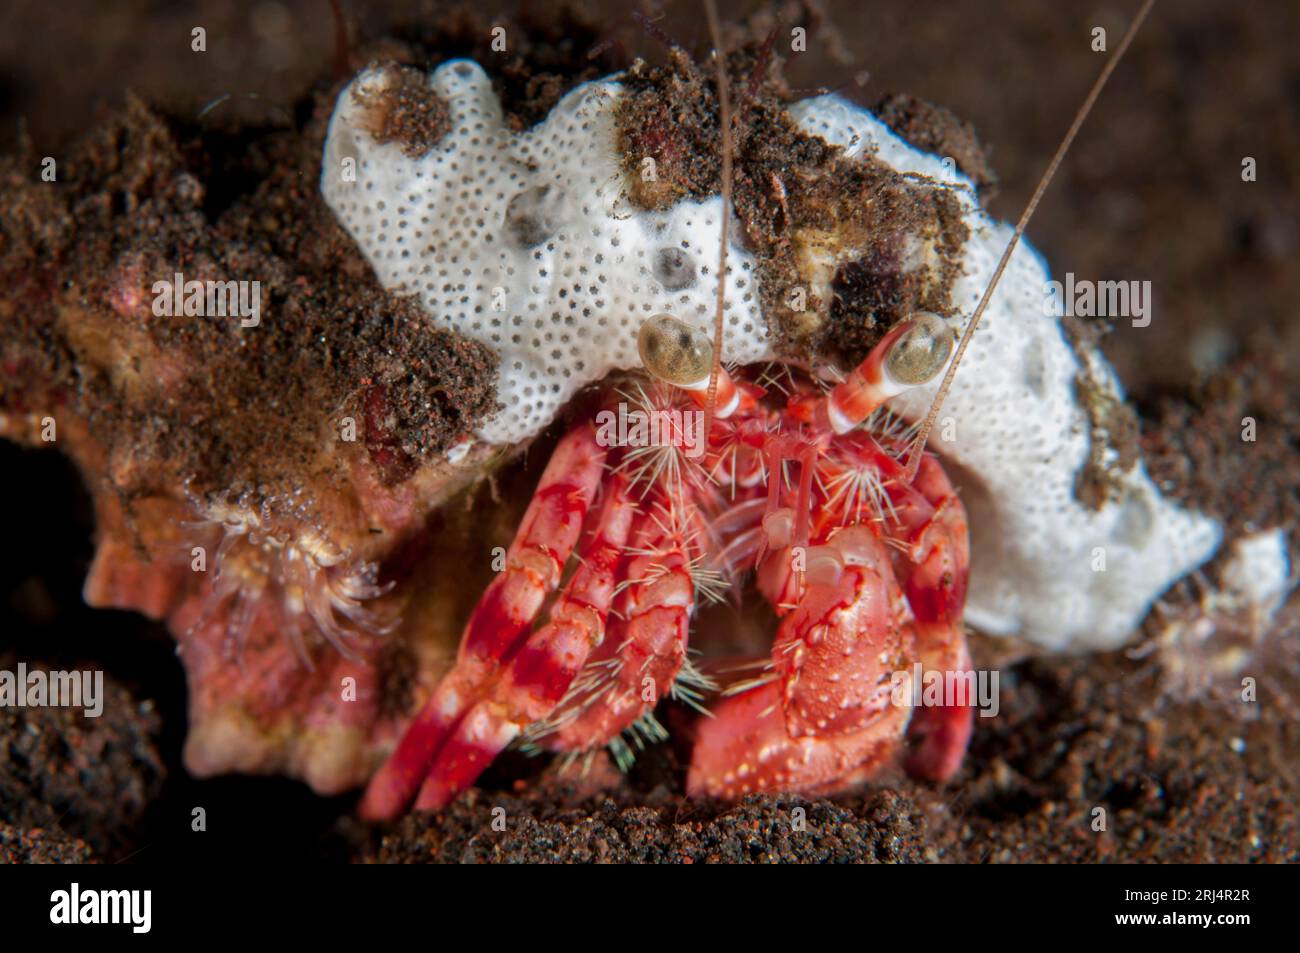 Anemone Hermit Crab, Dardanus pedunculatus, in shell with Ascidians, Ascidiacea Class, Pong Pong dive site, Seraya, Karangasem, Bali, Indonesia Stock Photo